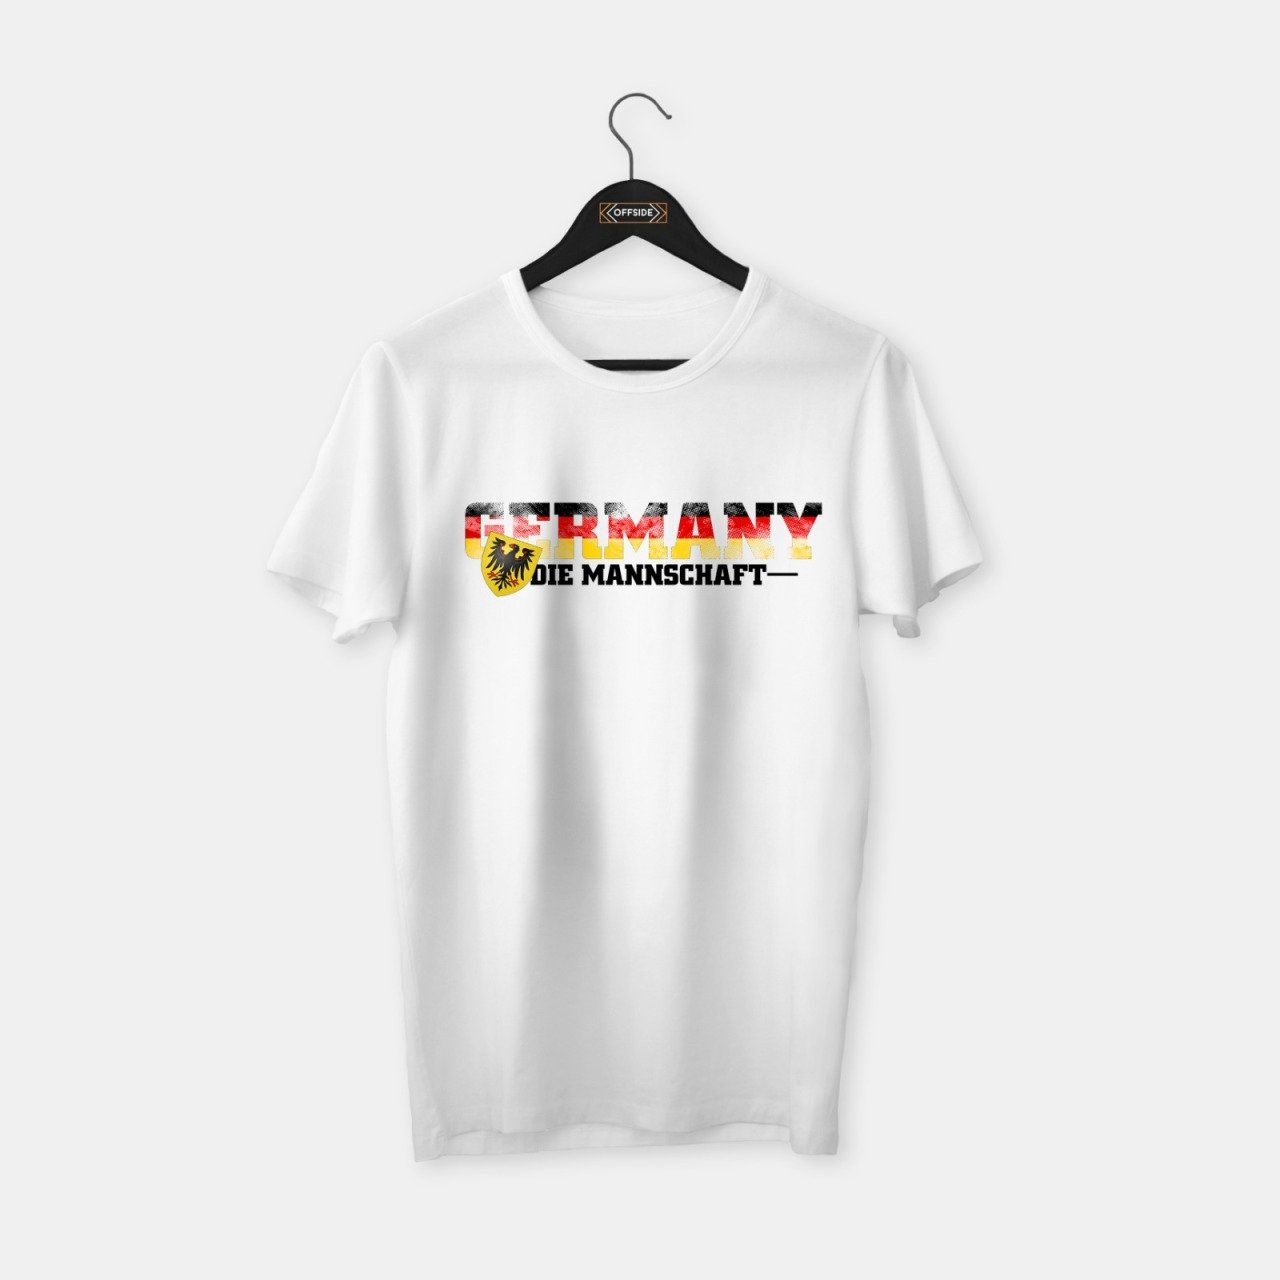 Germany (Almanya) T-shirt